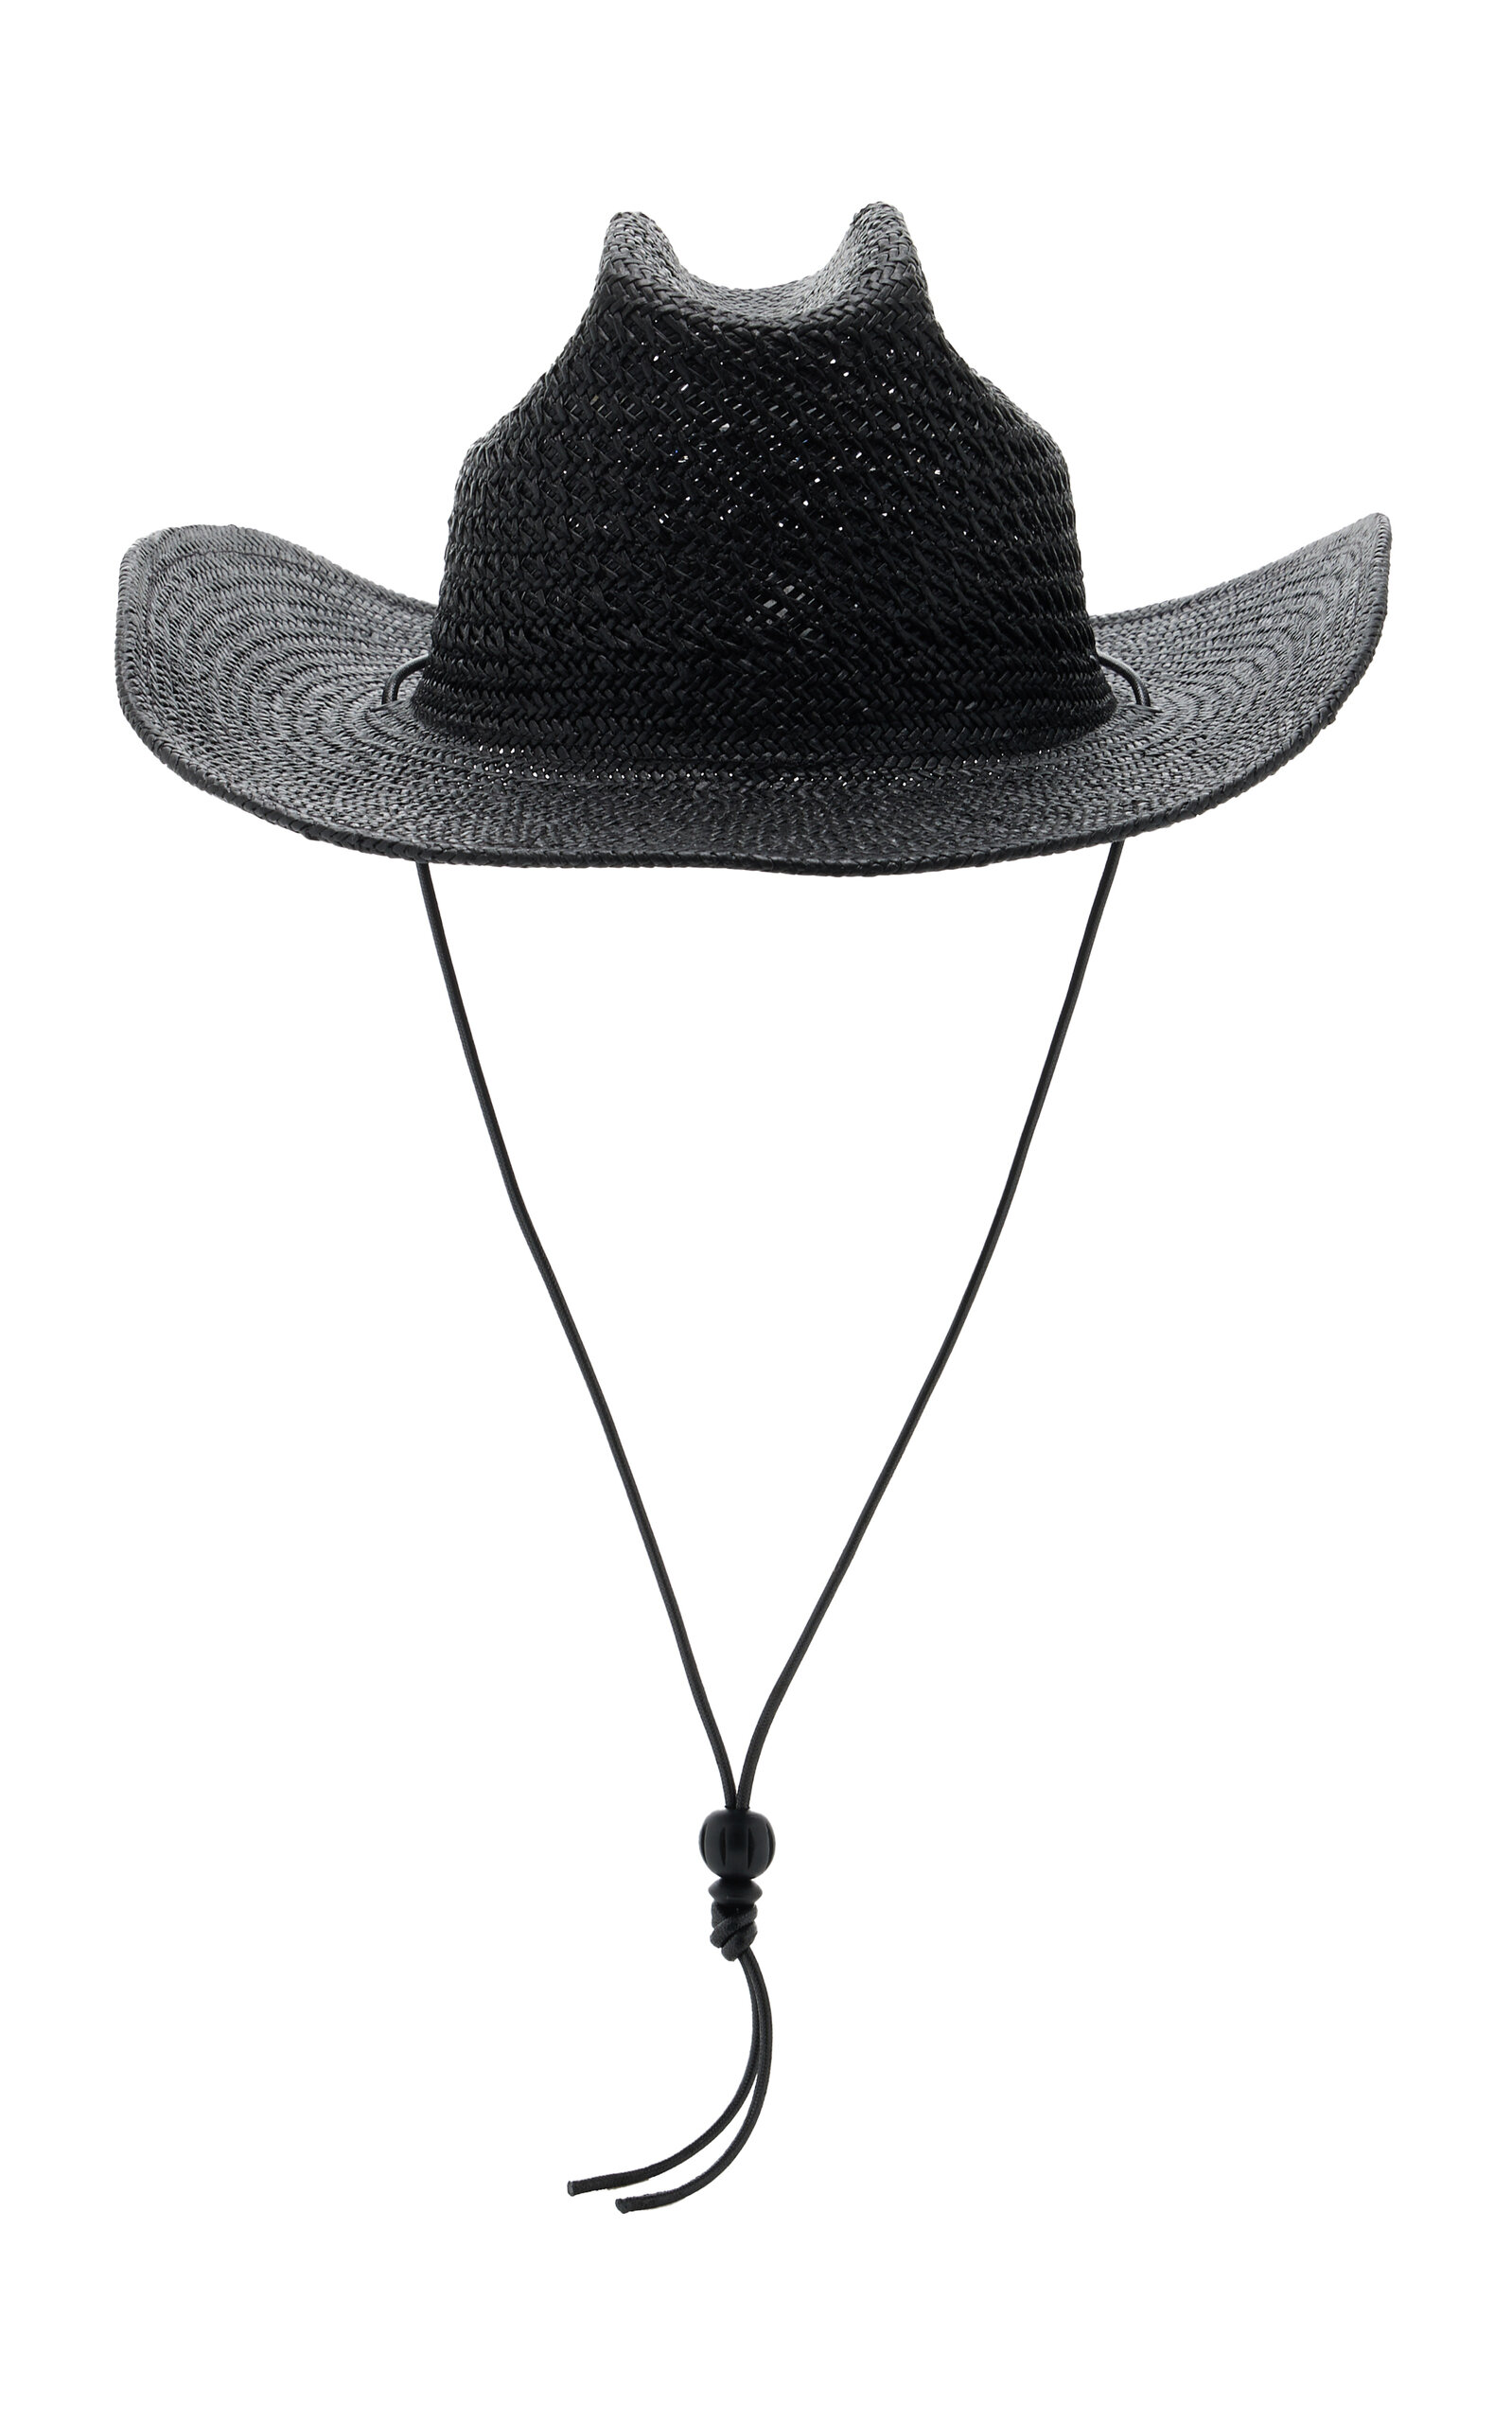 The Outlaw II Raffia Hat